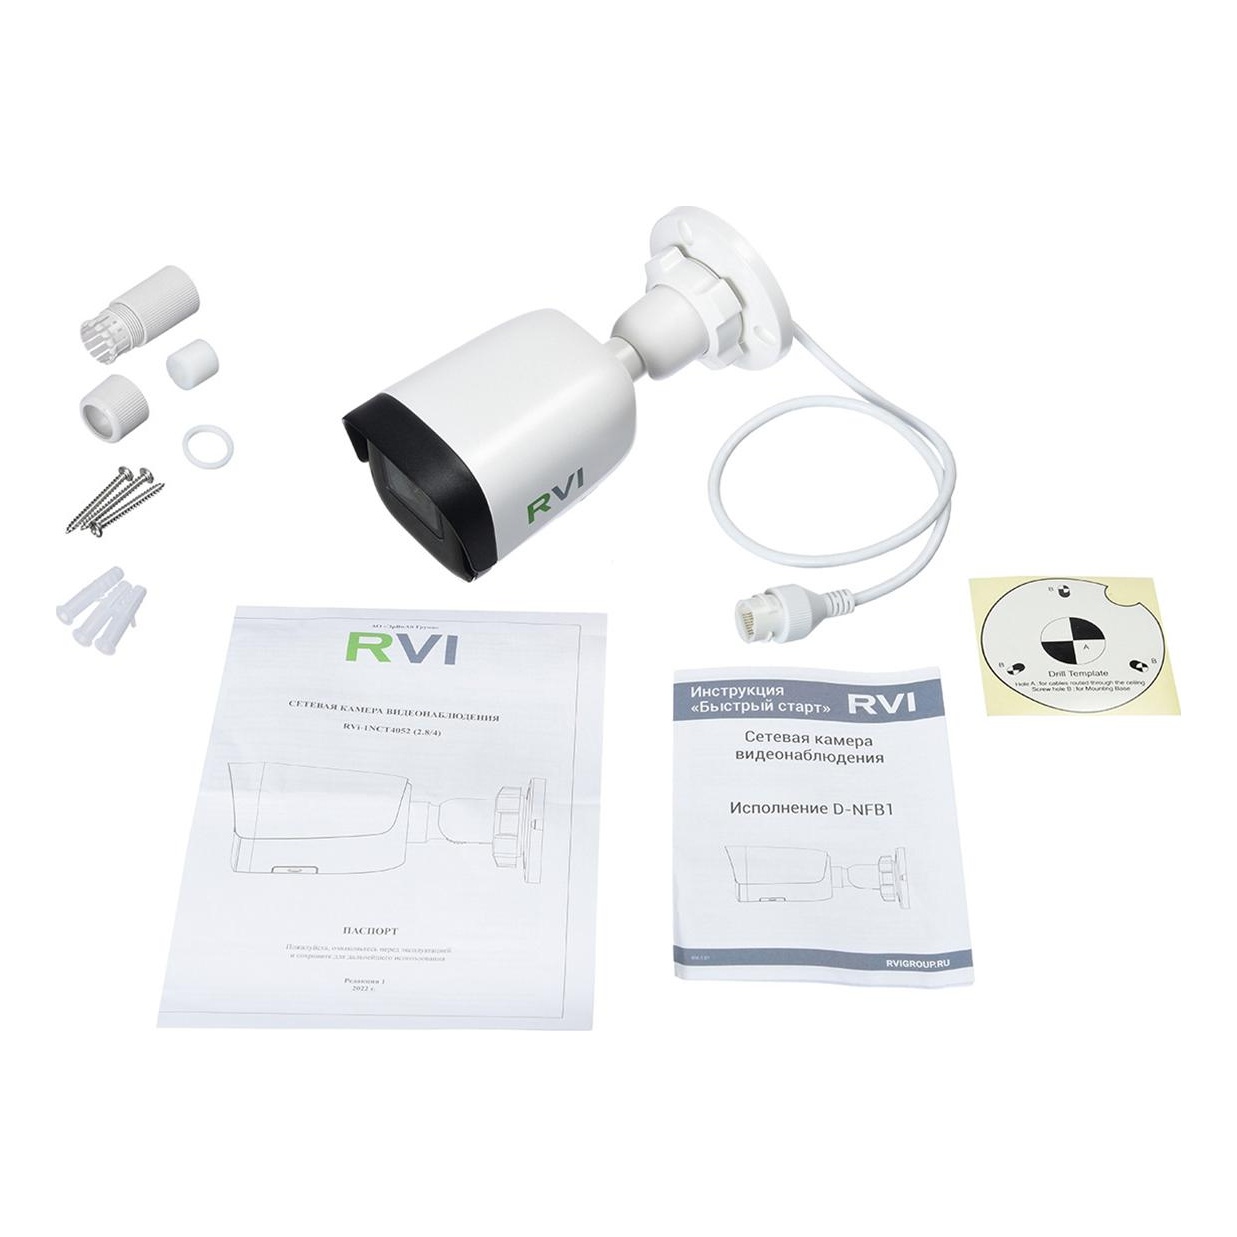 RVi-1NCT4052 (2.8) white IP видеокамера